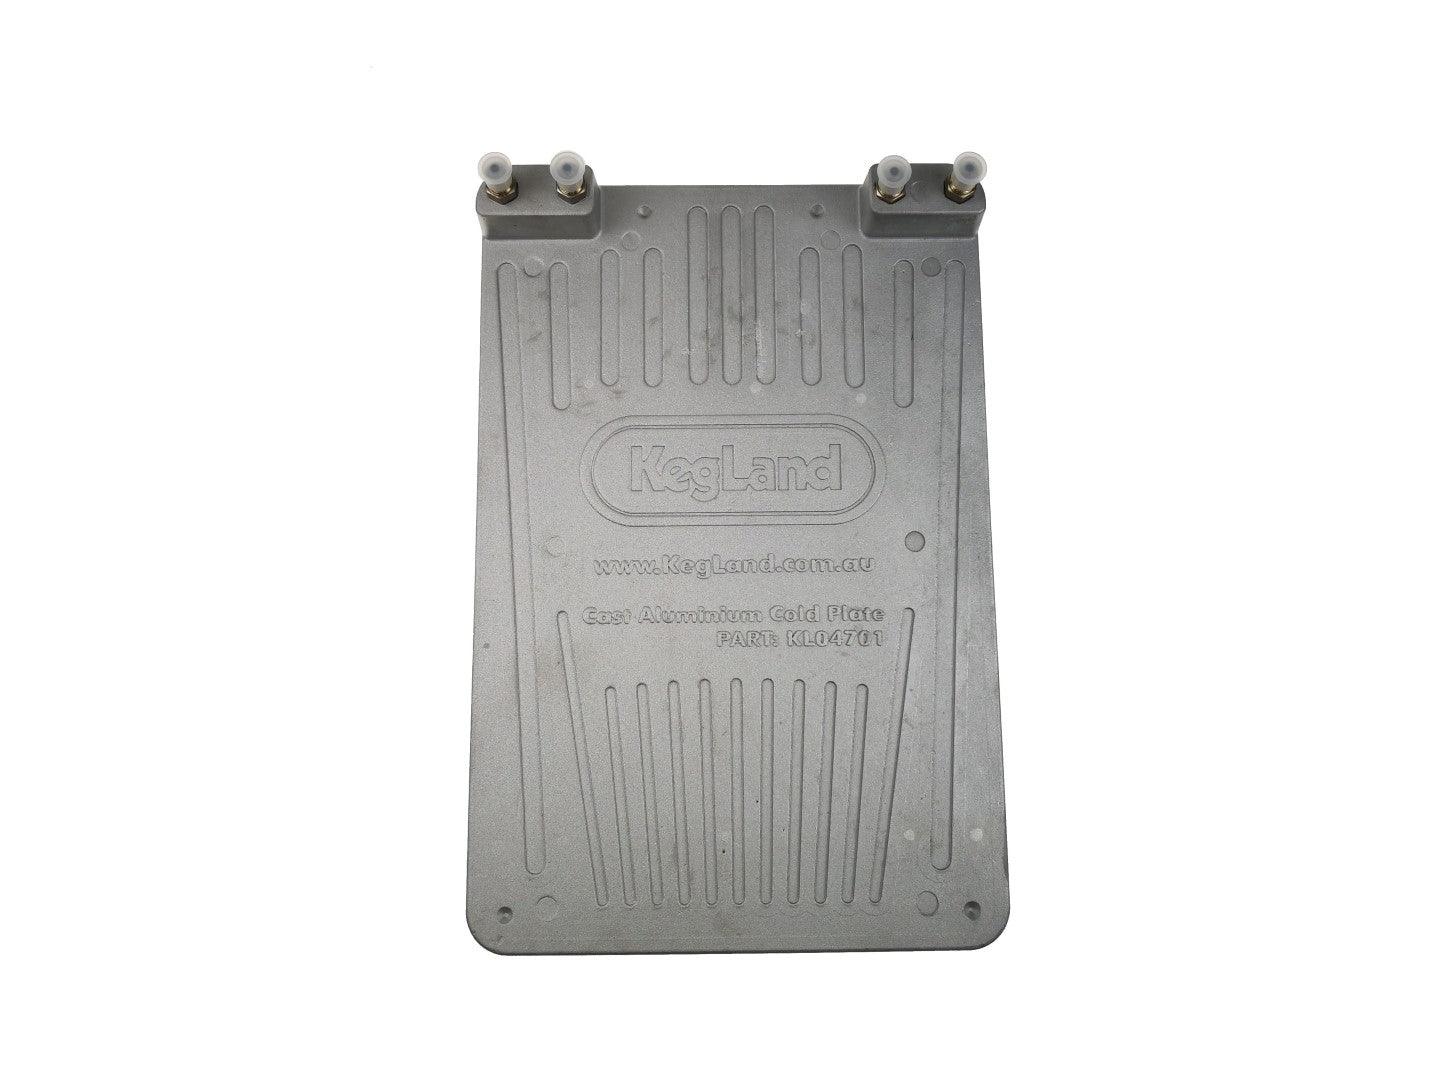 Cast Aluminum Cold Plate - KegLand